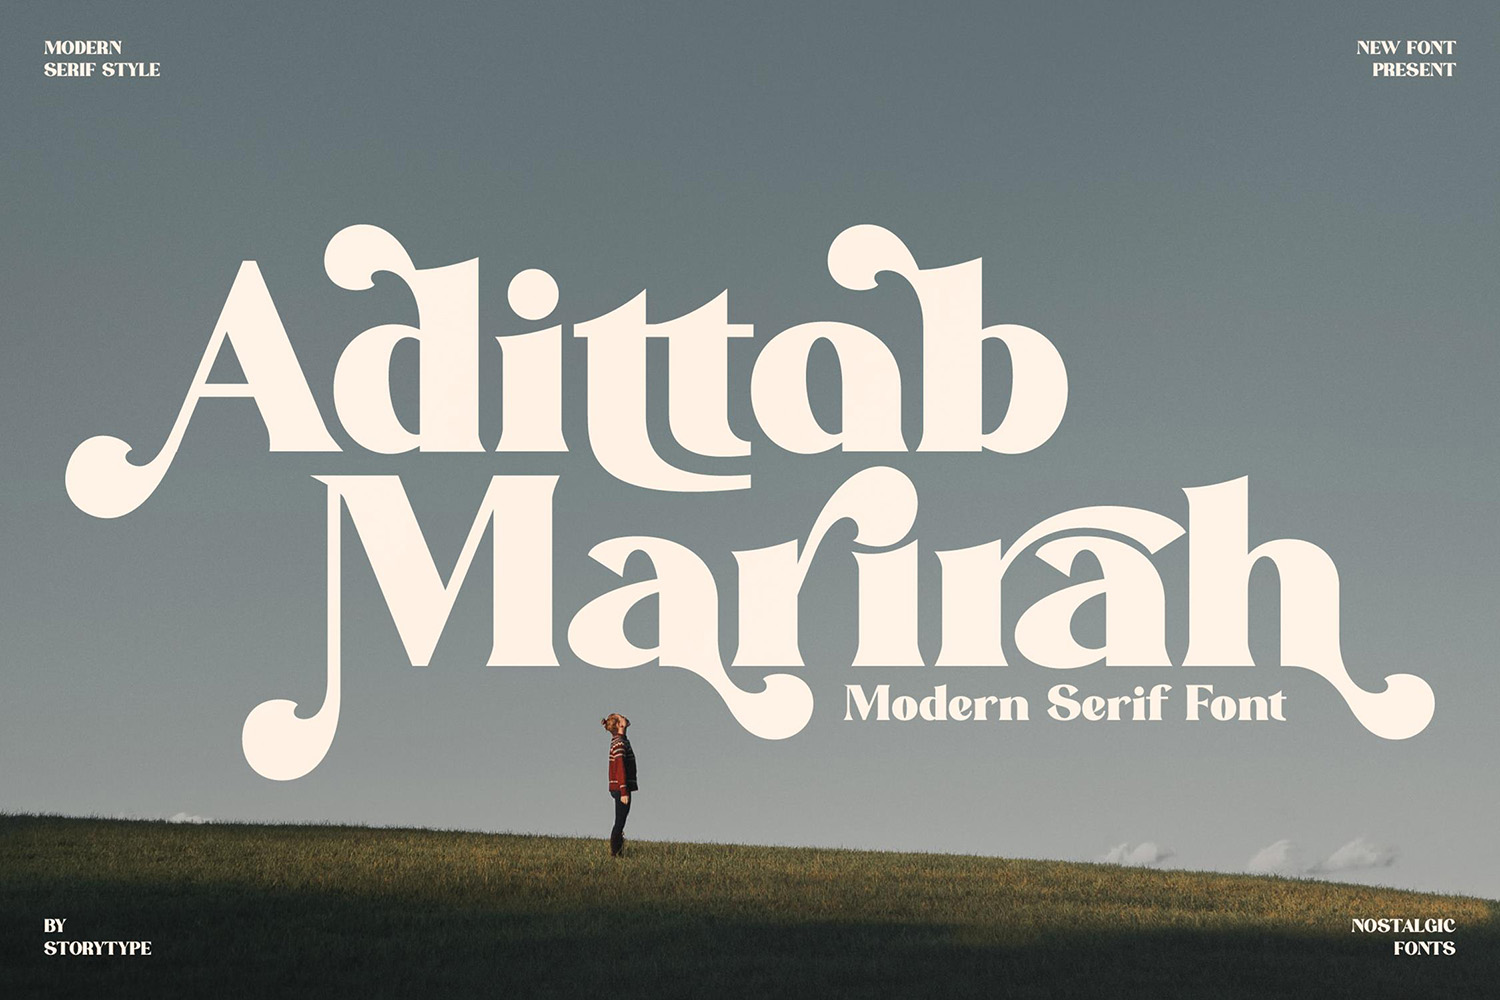 Adittab Marirah Free Font